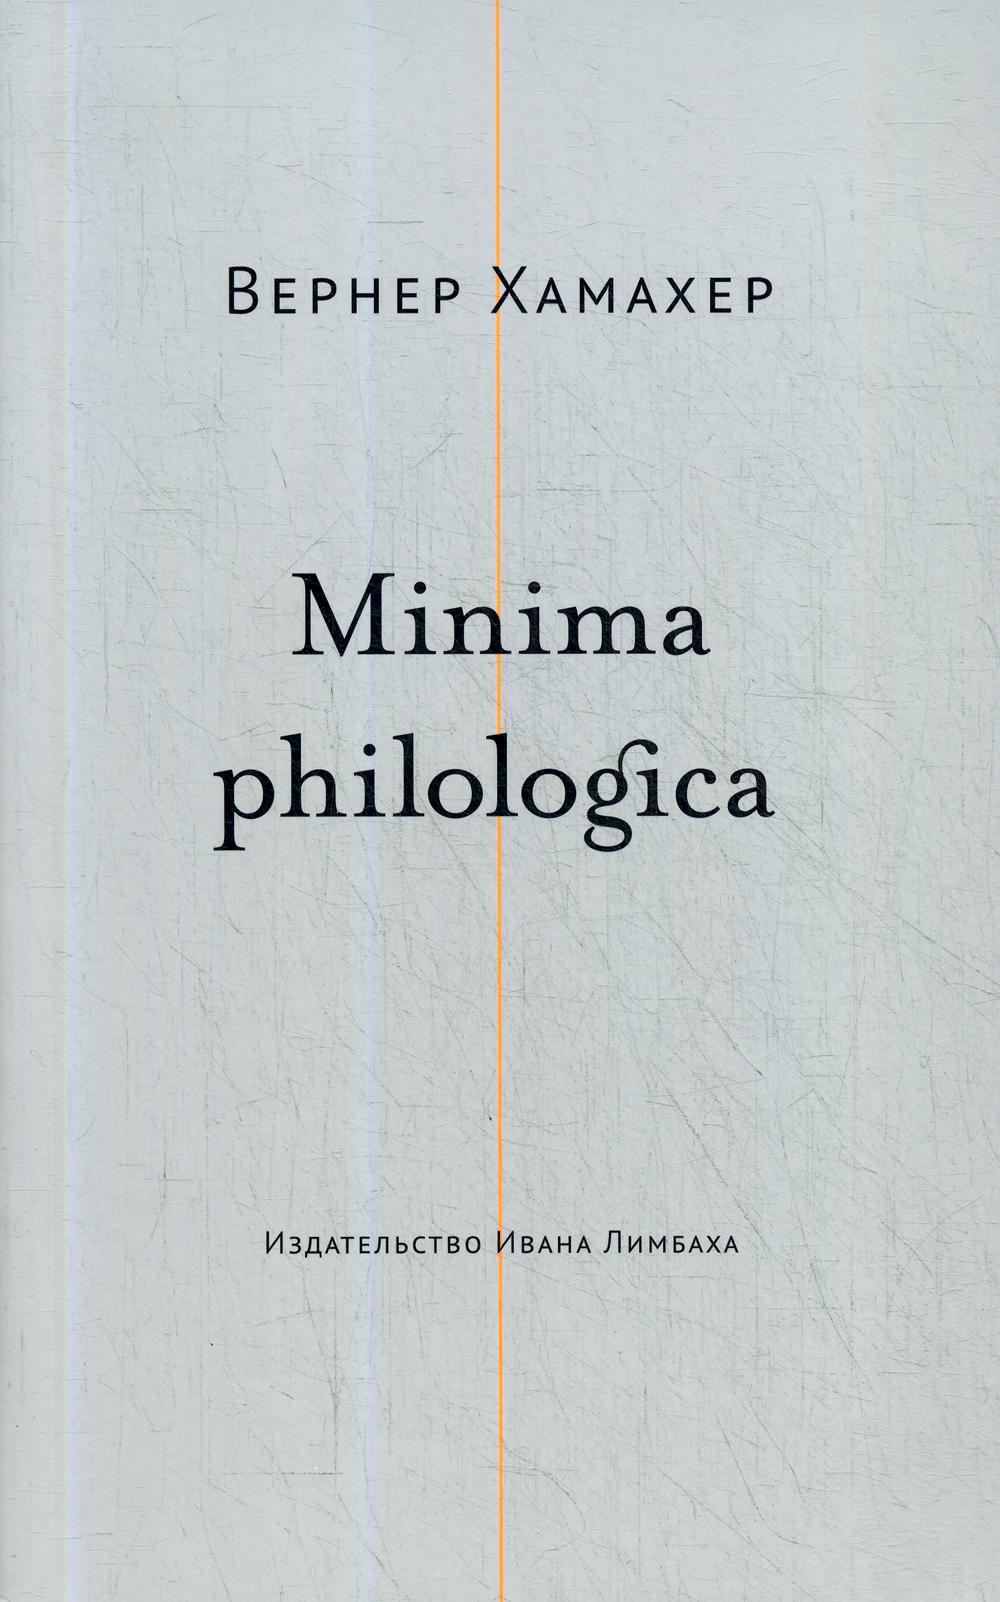   Minima philologica